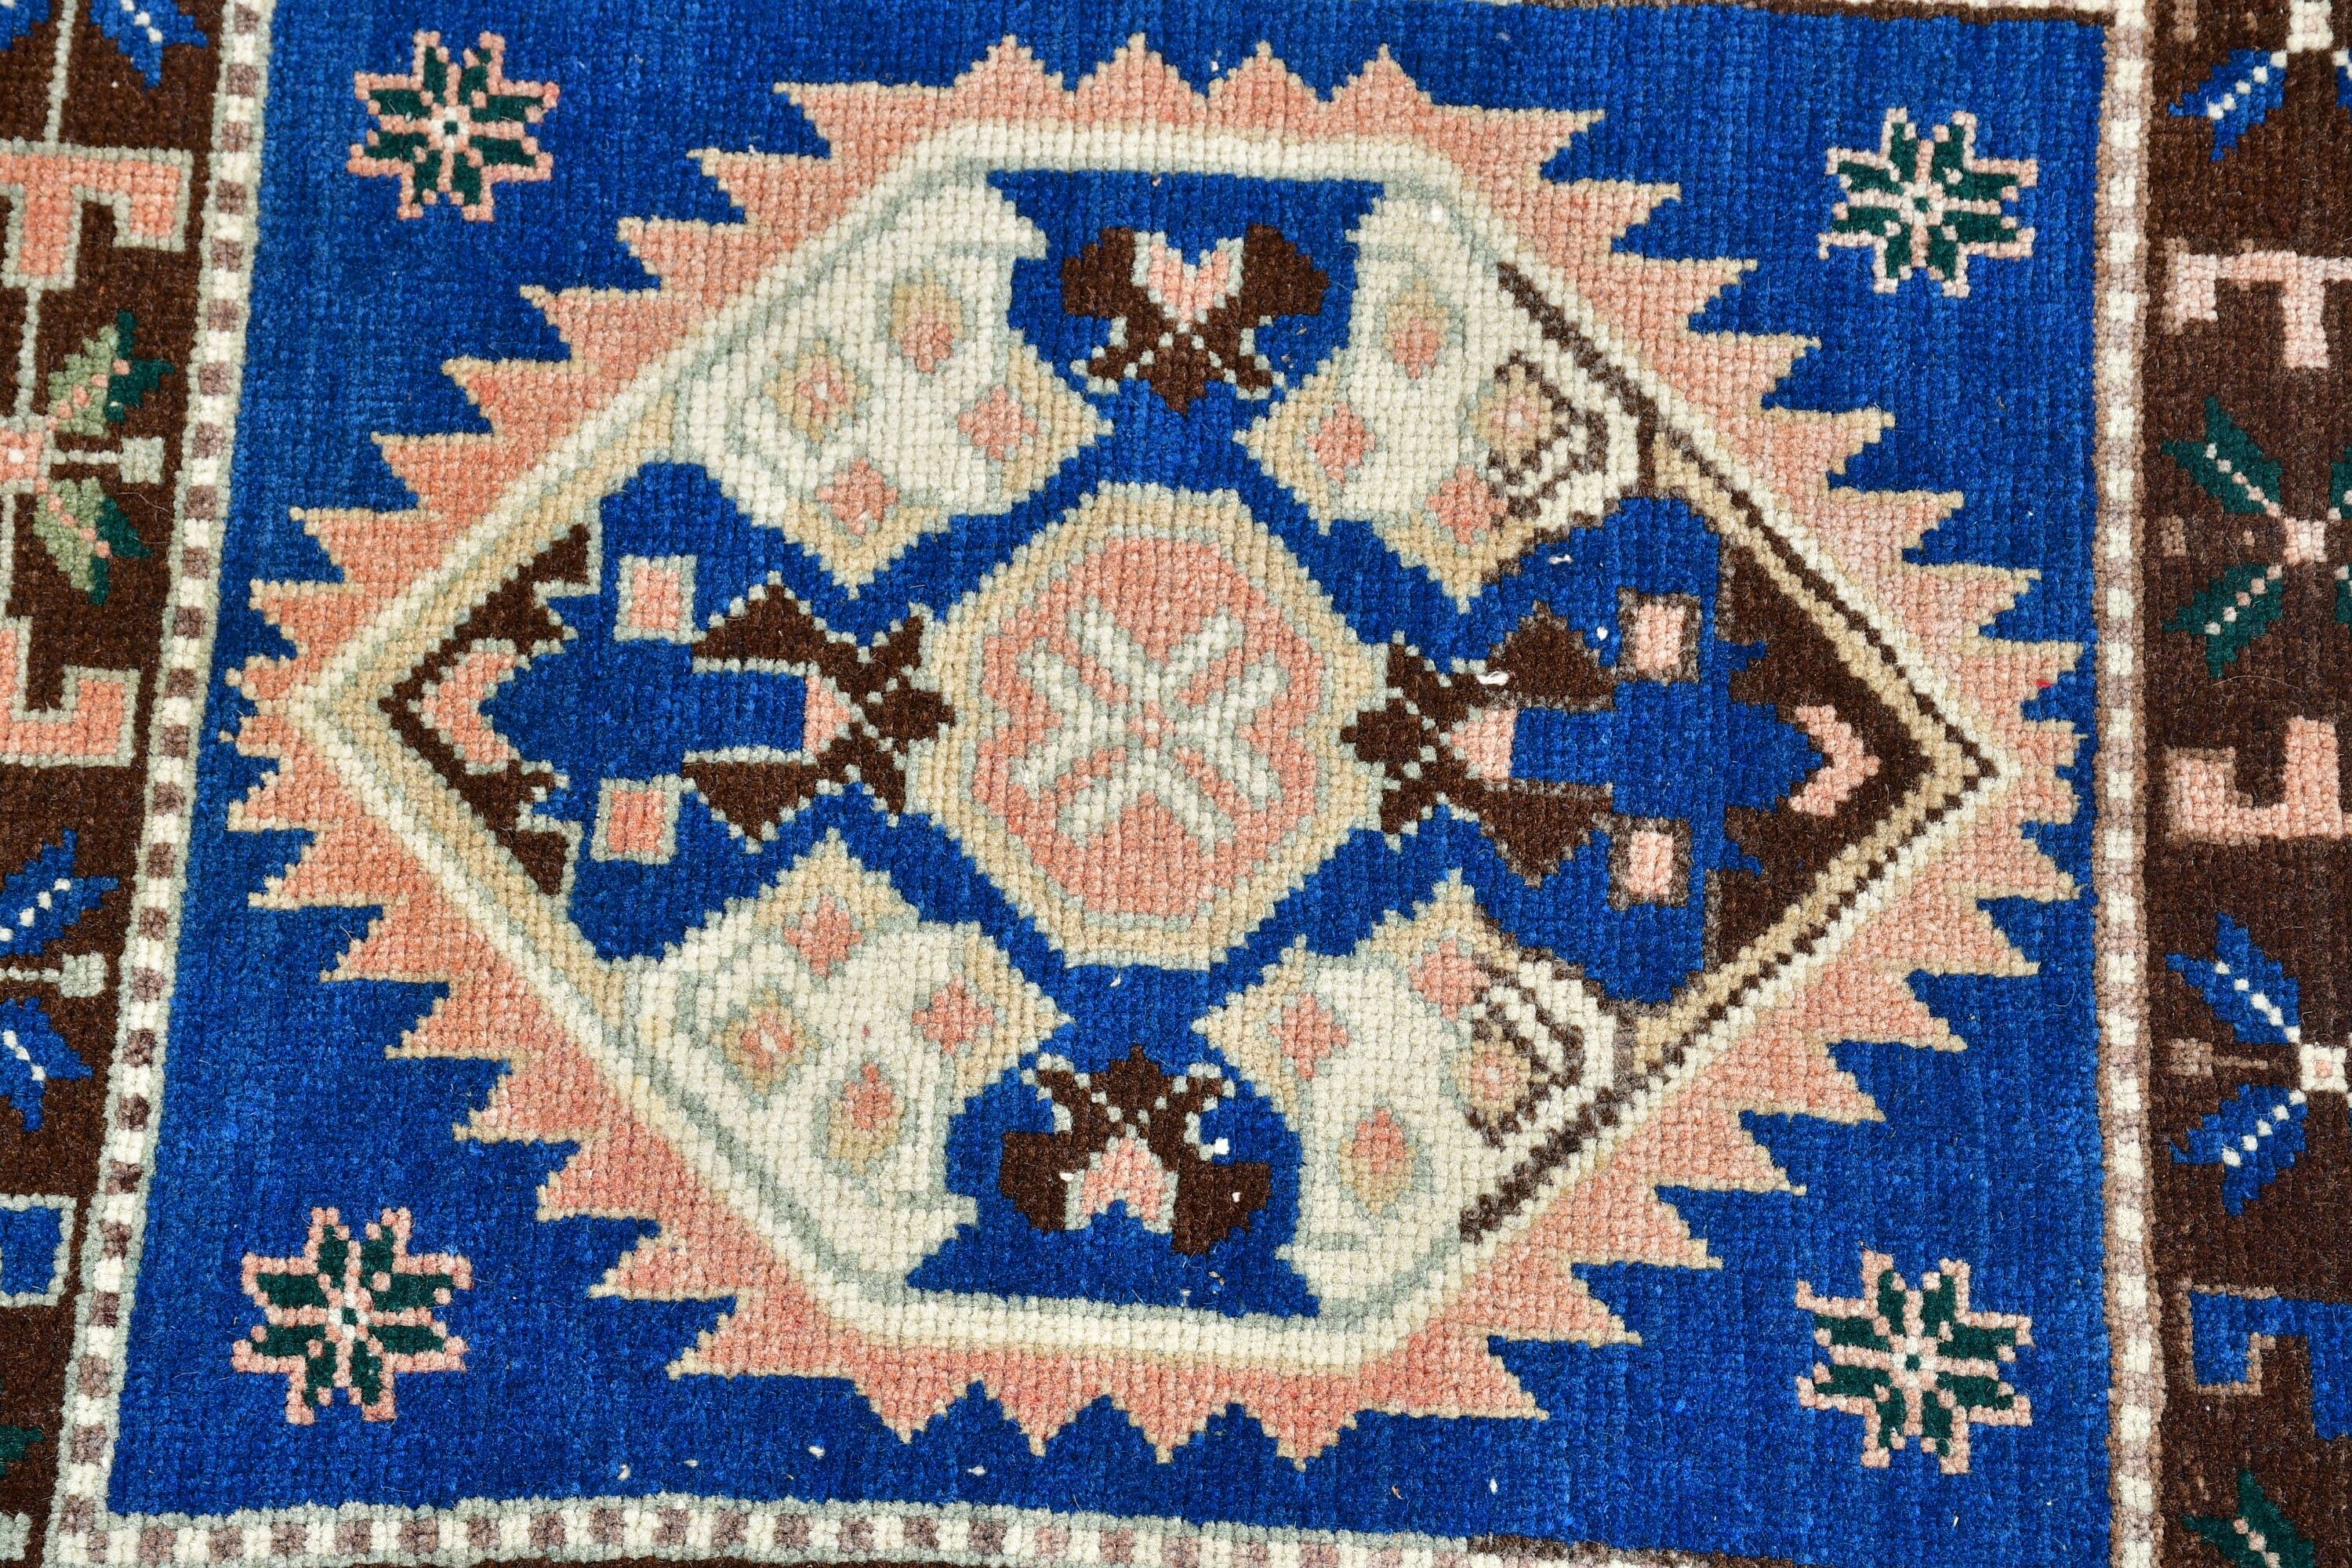 Anatolian Rug, Eclectic Rugs, Brown Cool Rug, Home Decor Rug, 1.9x1.7 ft Small Rug, Bathroom Rug, Car Mat Rugs, Vintage Rug, Turkish Rugs